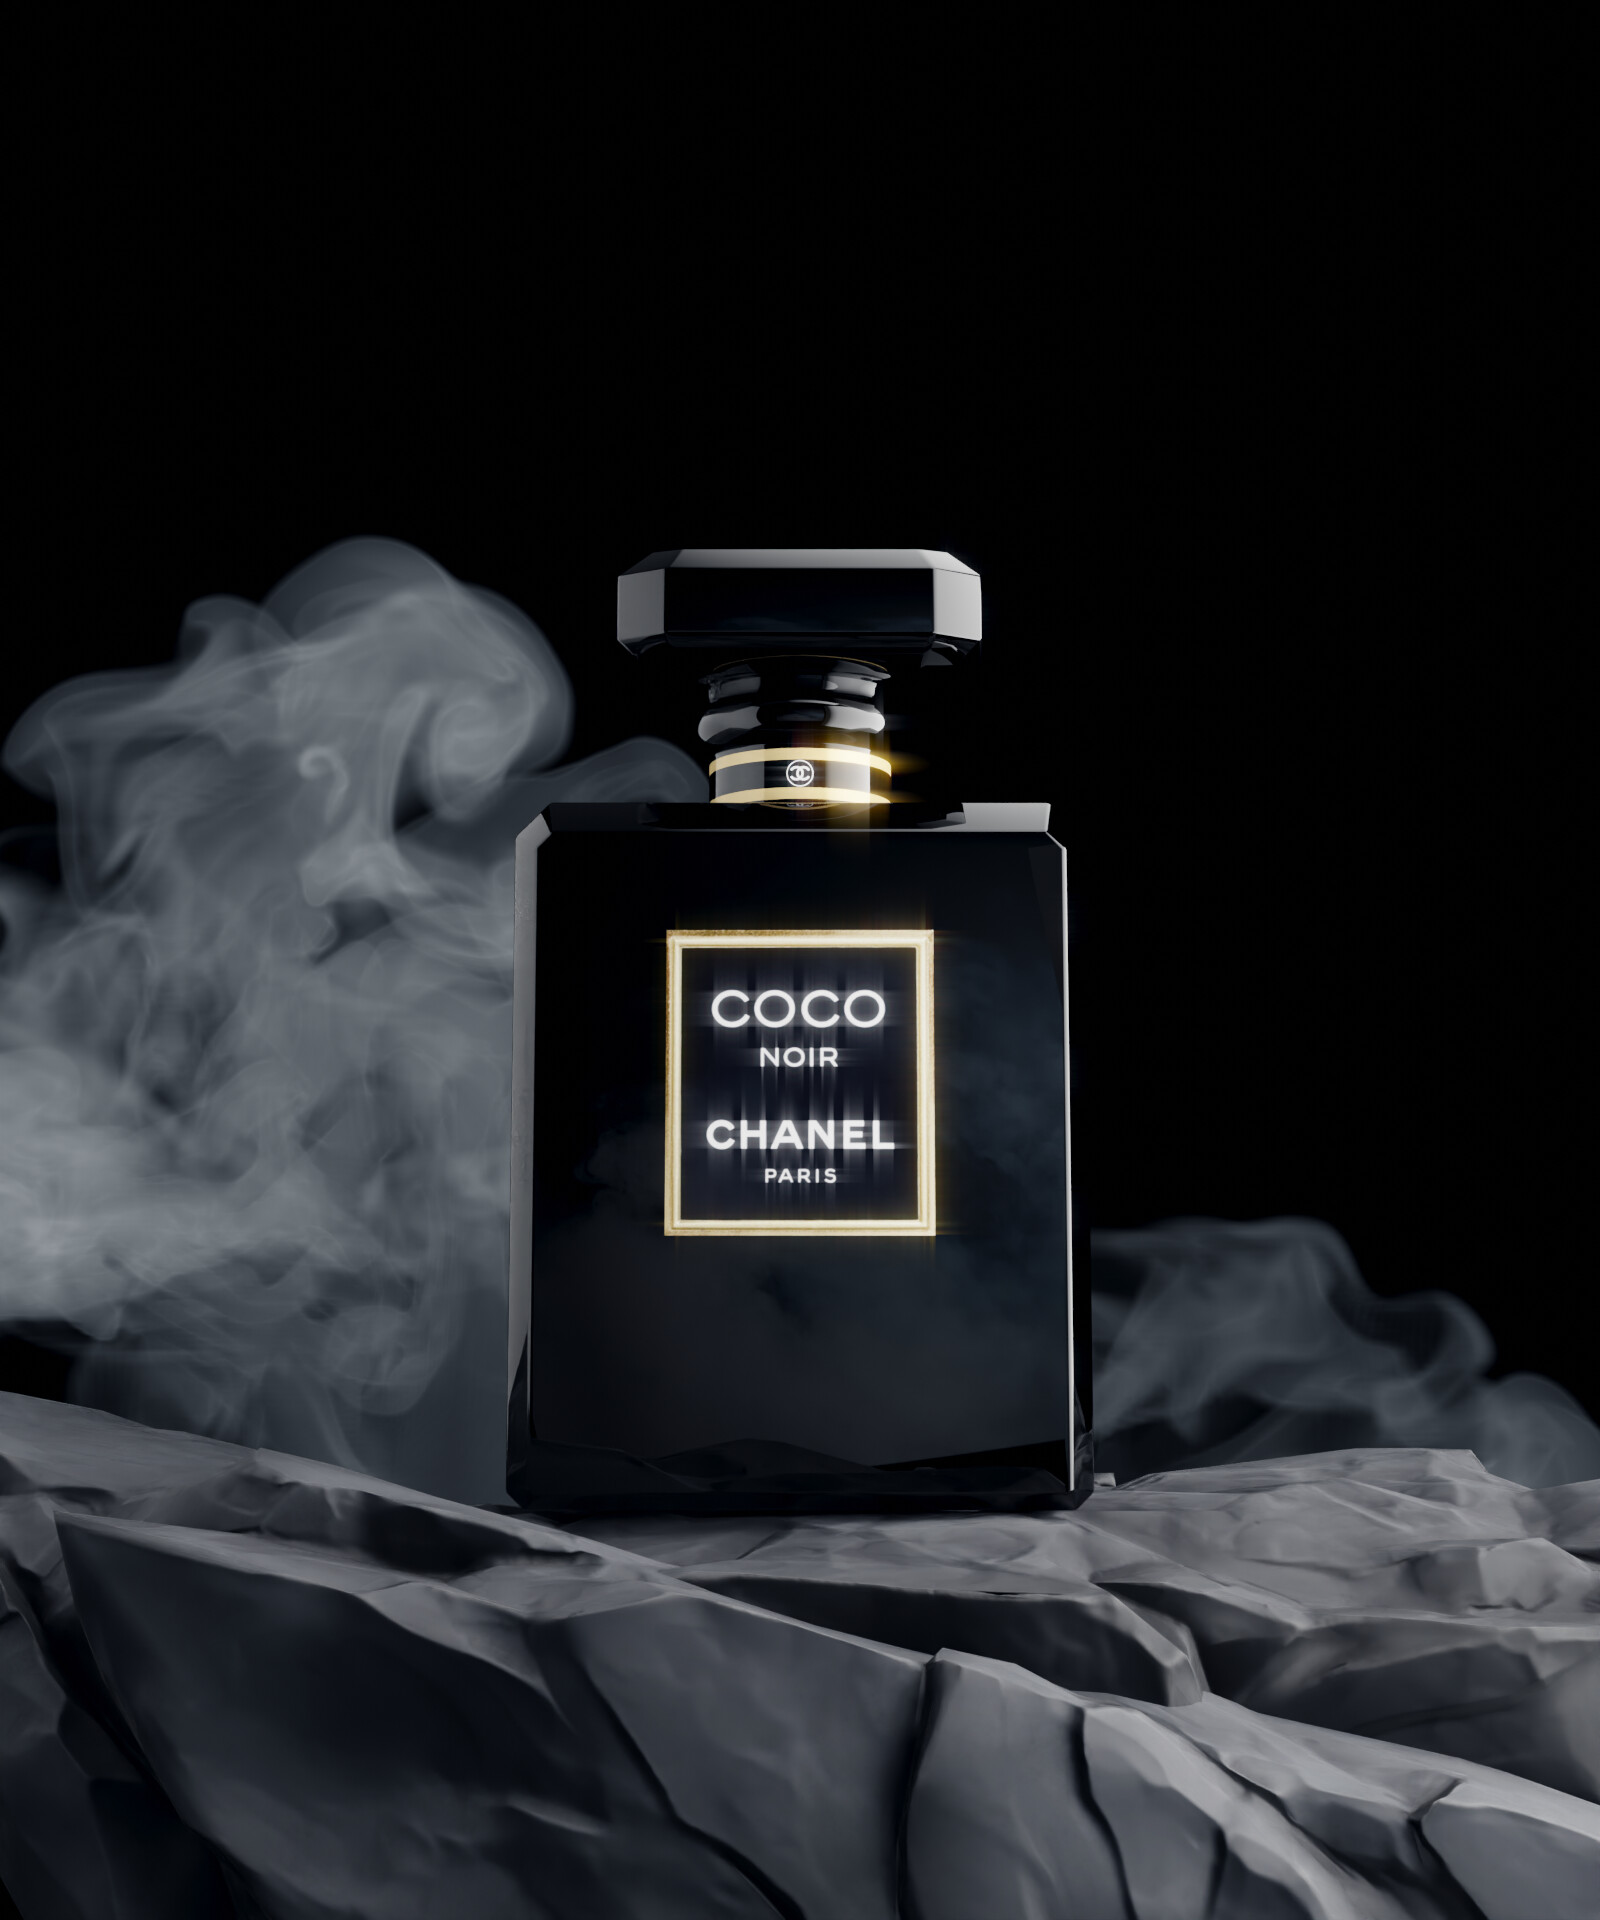 CHANEL COCO NOIR Eau de Parfum Spray 3.4 Fl. Oz. 3145891136609